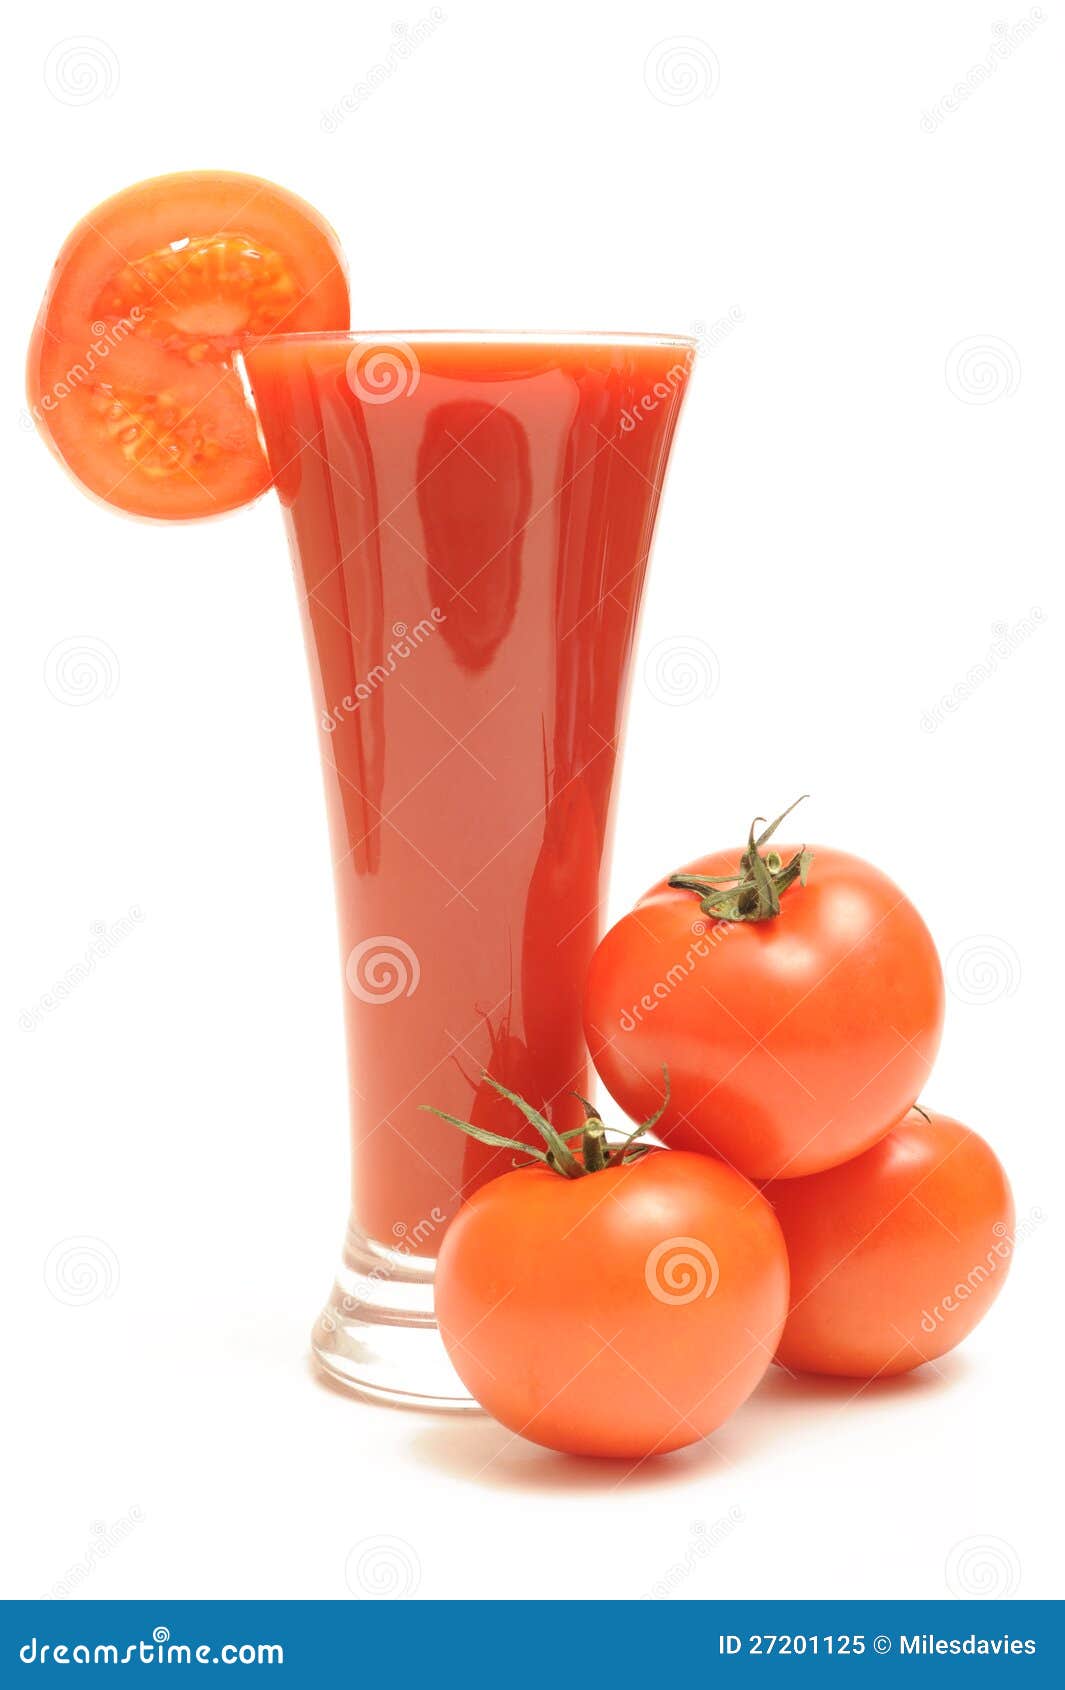 tomato juice clipart - photo #38